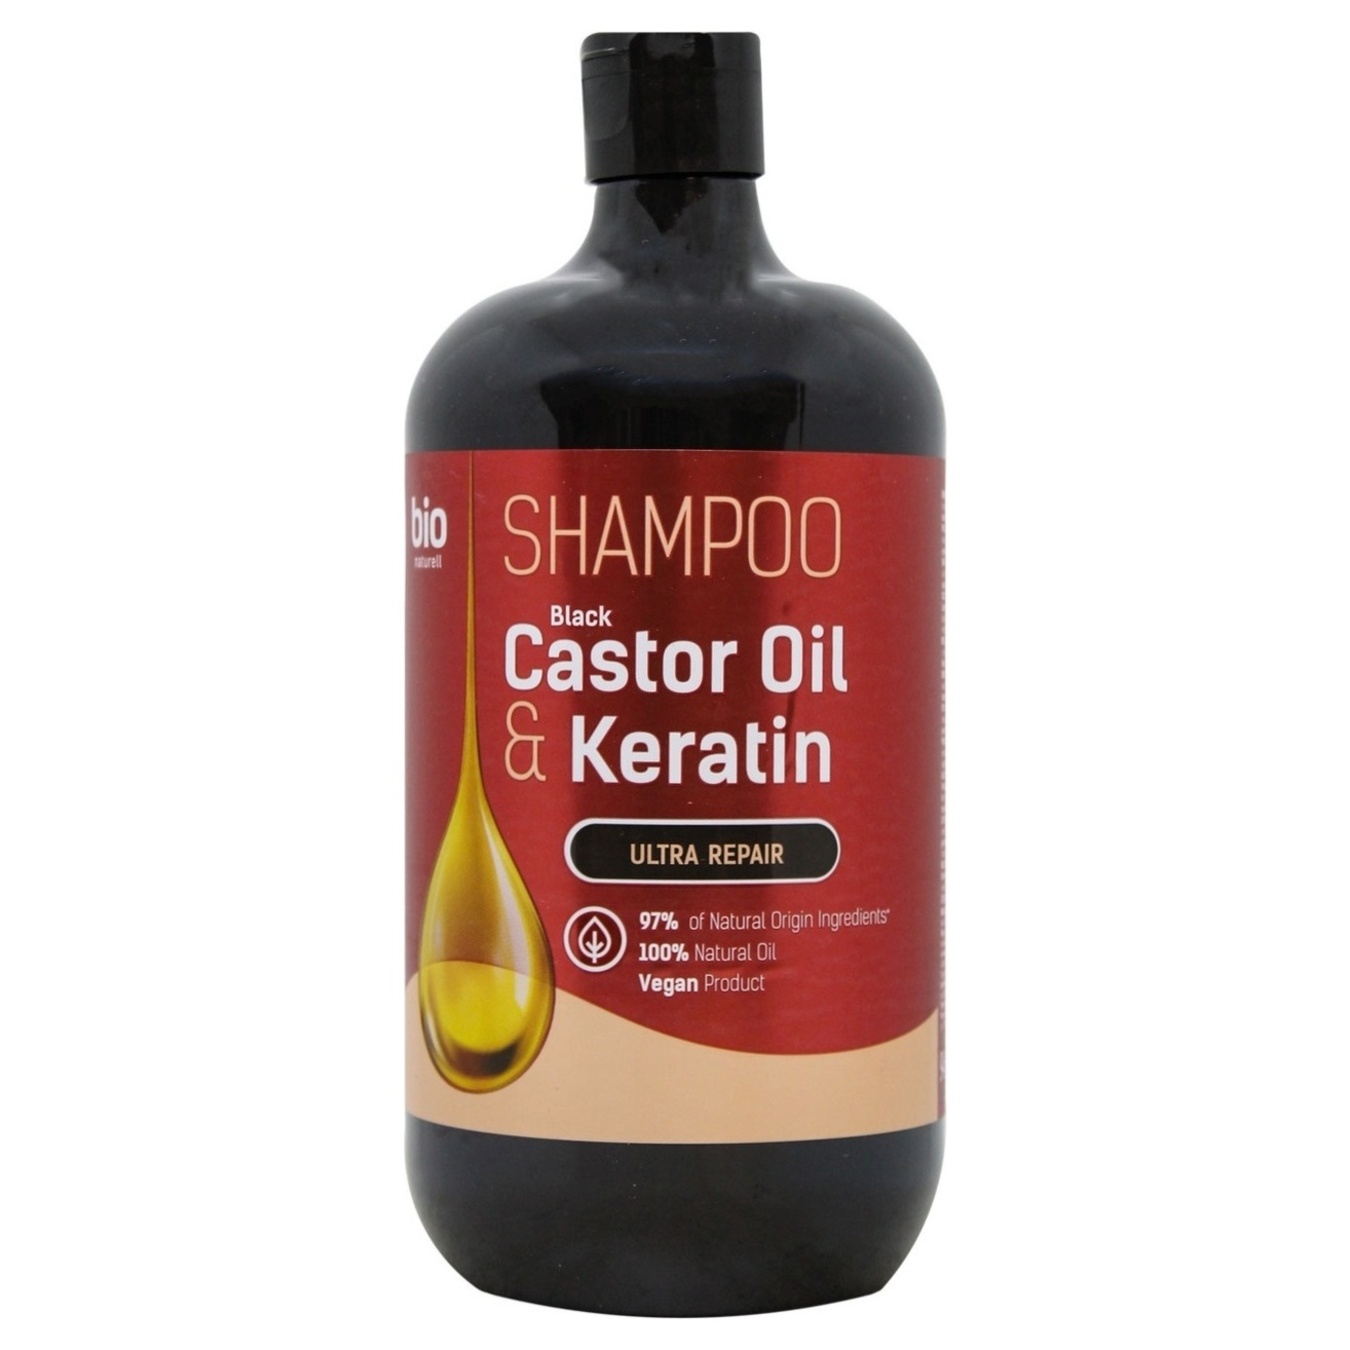 Bio Naturell shampoo for all hair types black castor oil and keratin ...